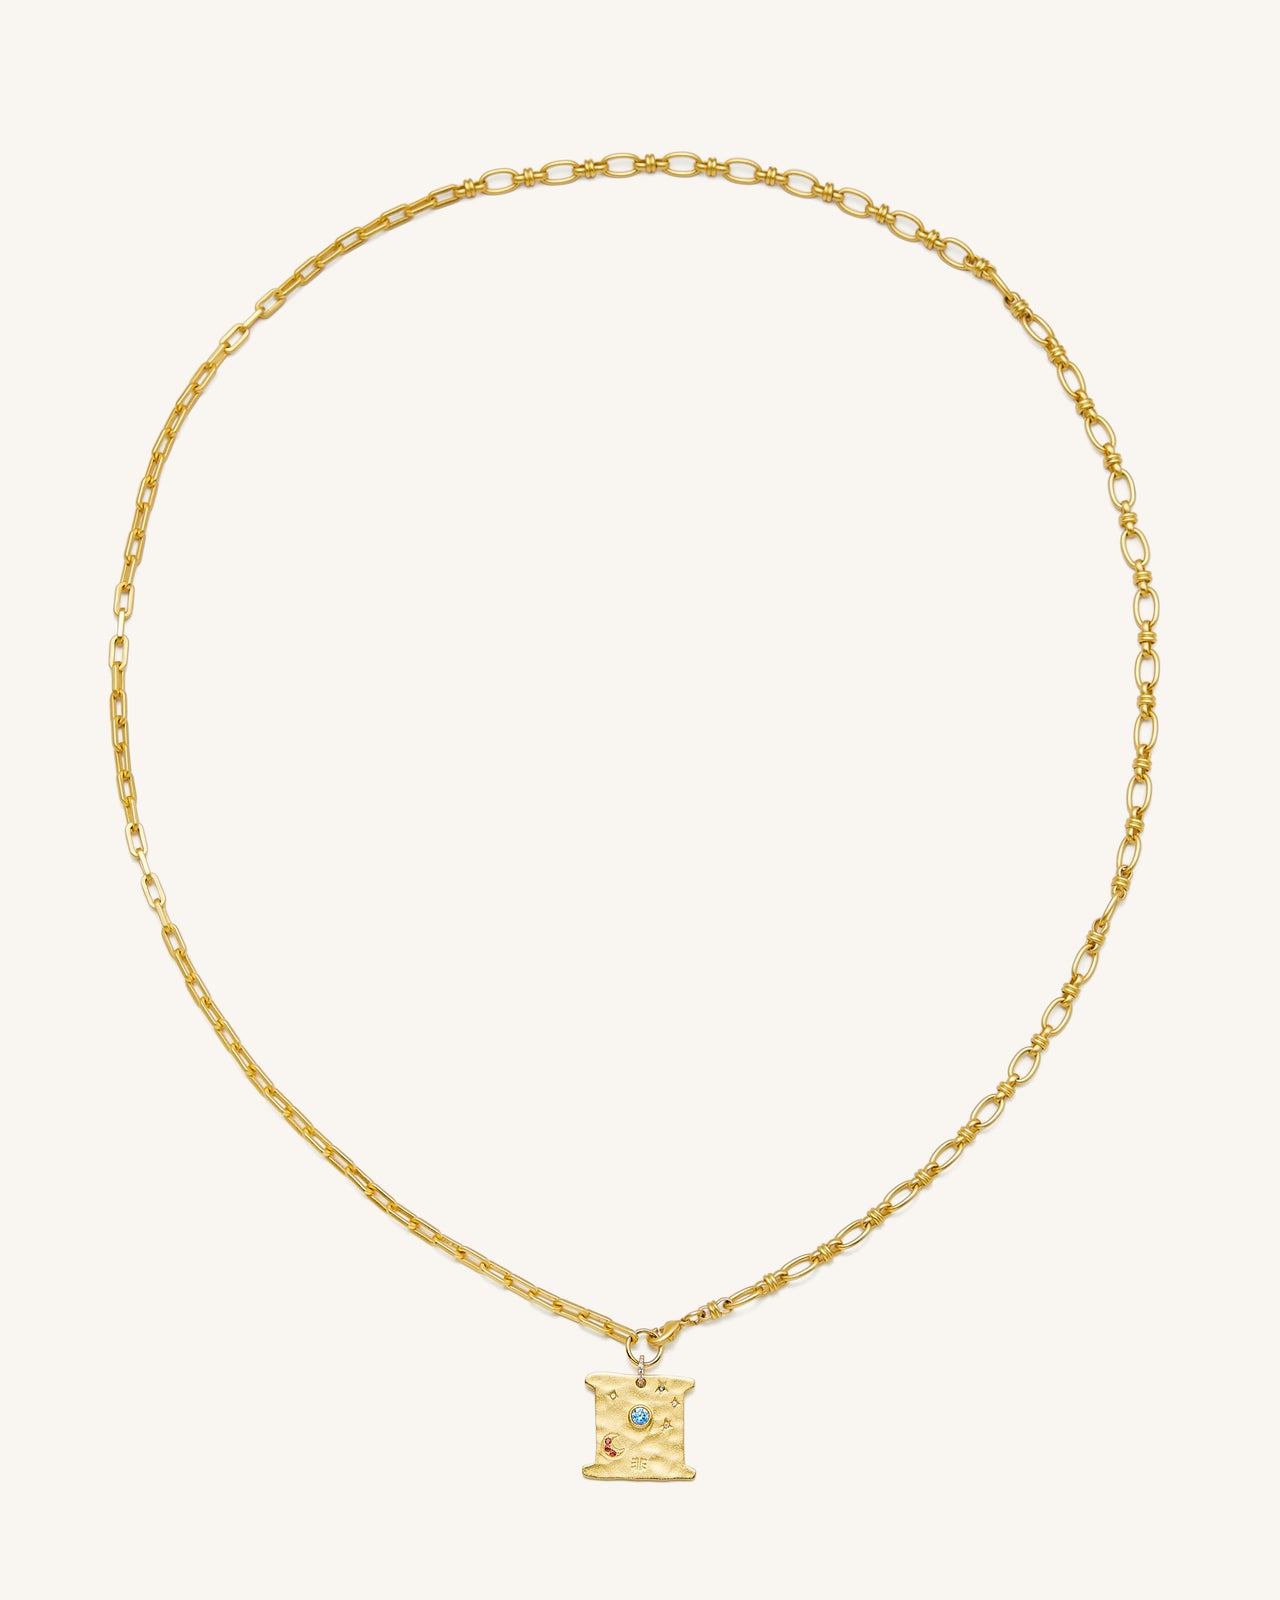 Cosmos Square Necklace - 18ct Gold Plated & Multicolor Zircon